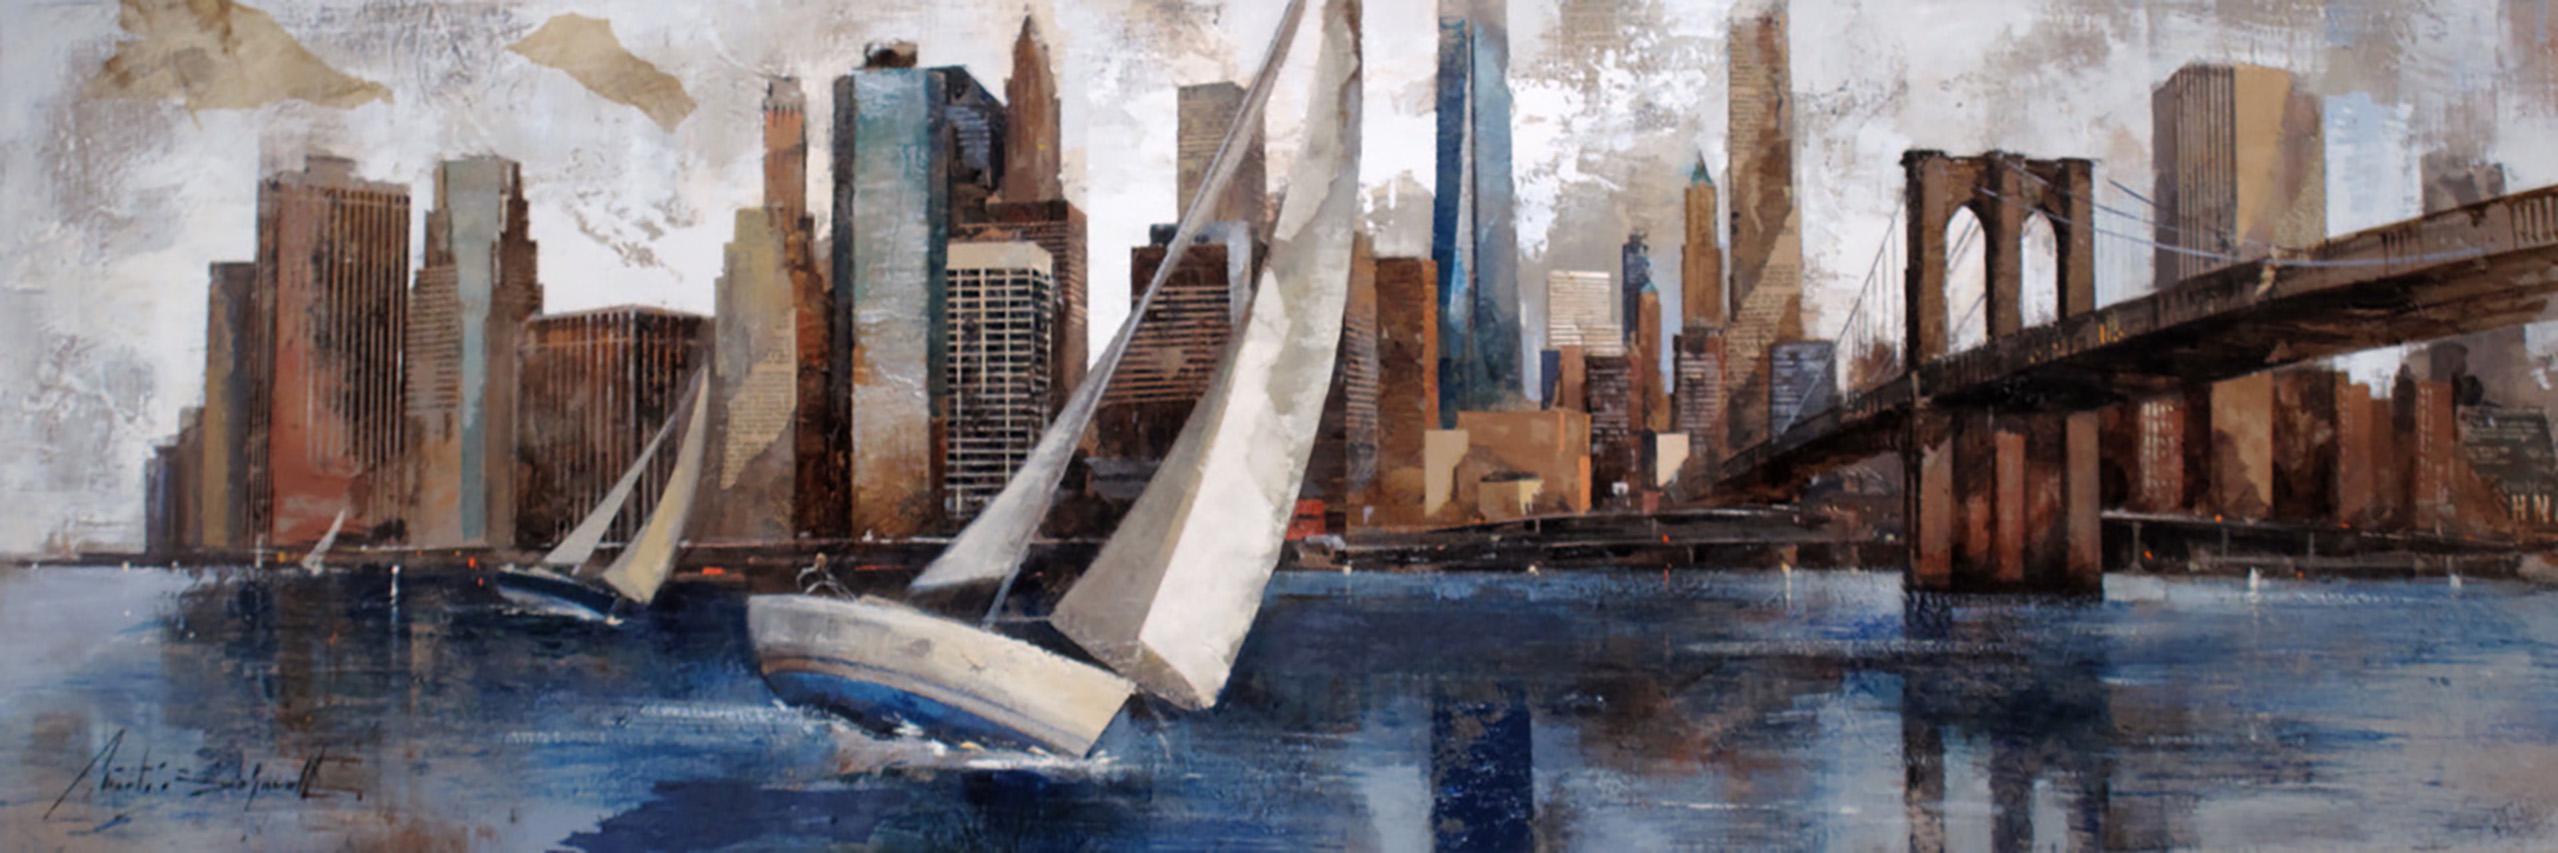 45025 Sailing In Manhattan - 21st Century, Contemporary, Figurative Painting